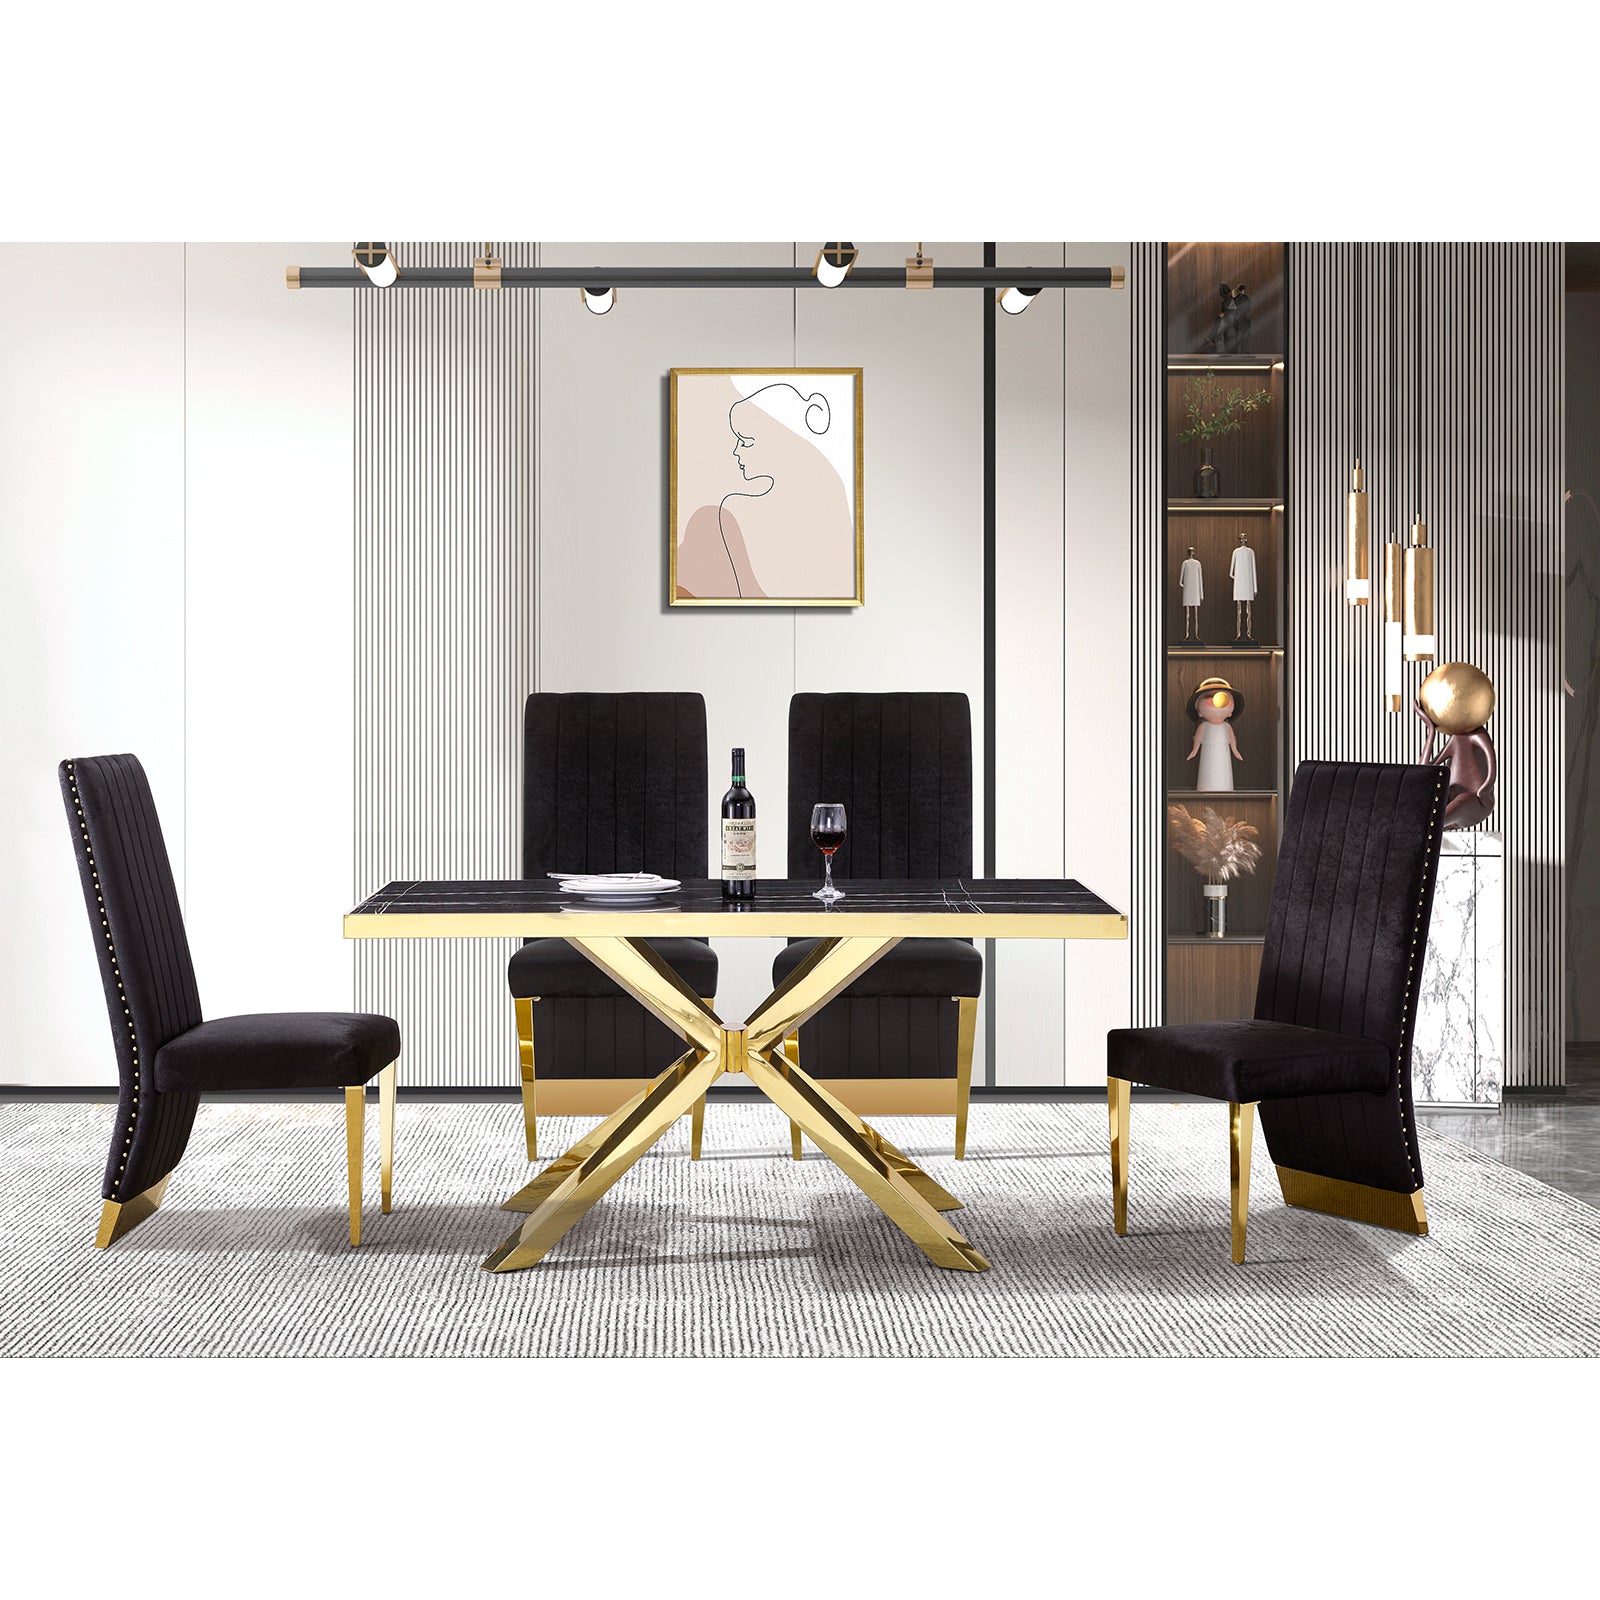 674-Set | AUZ Black and Gold Dining room Sets for 6